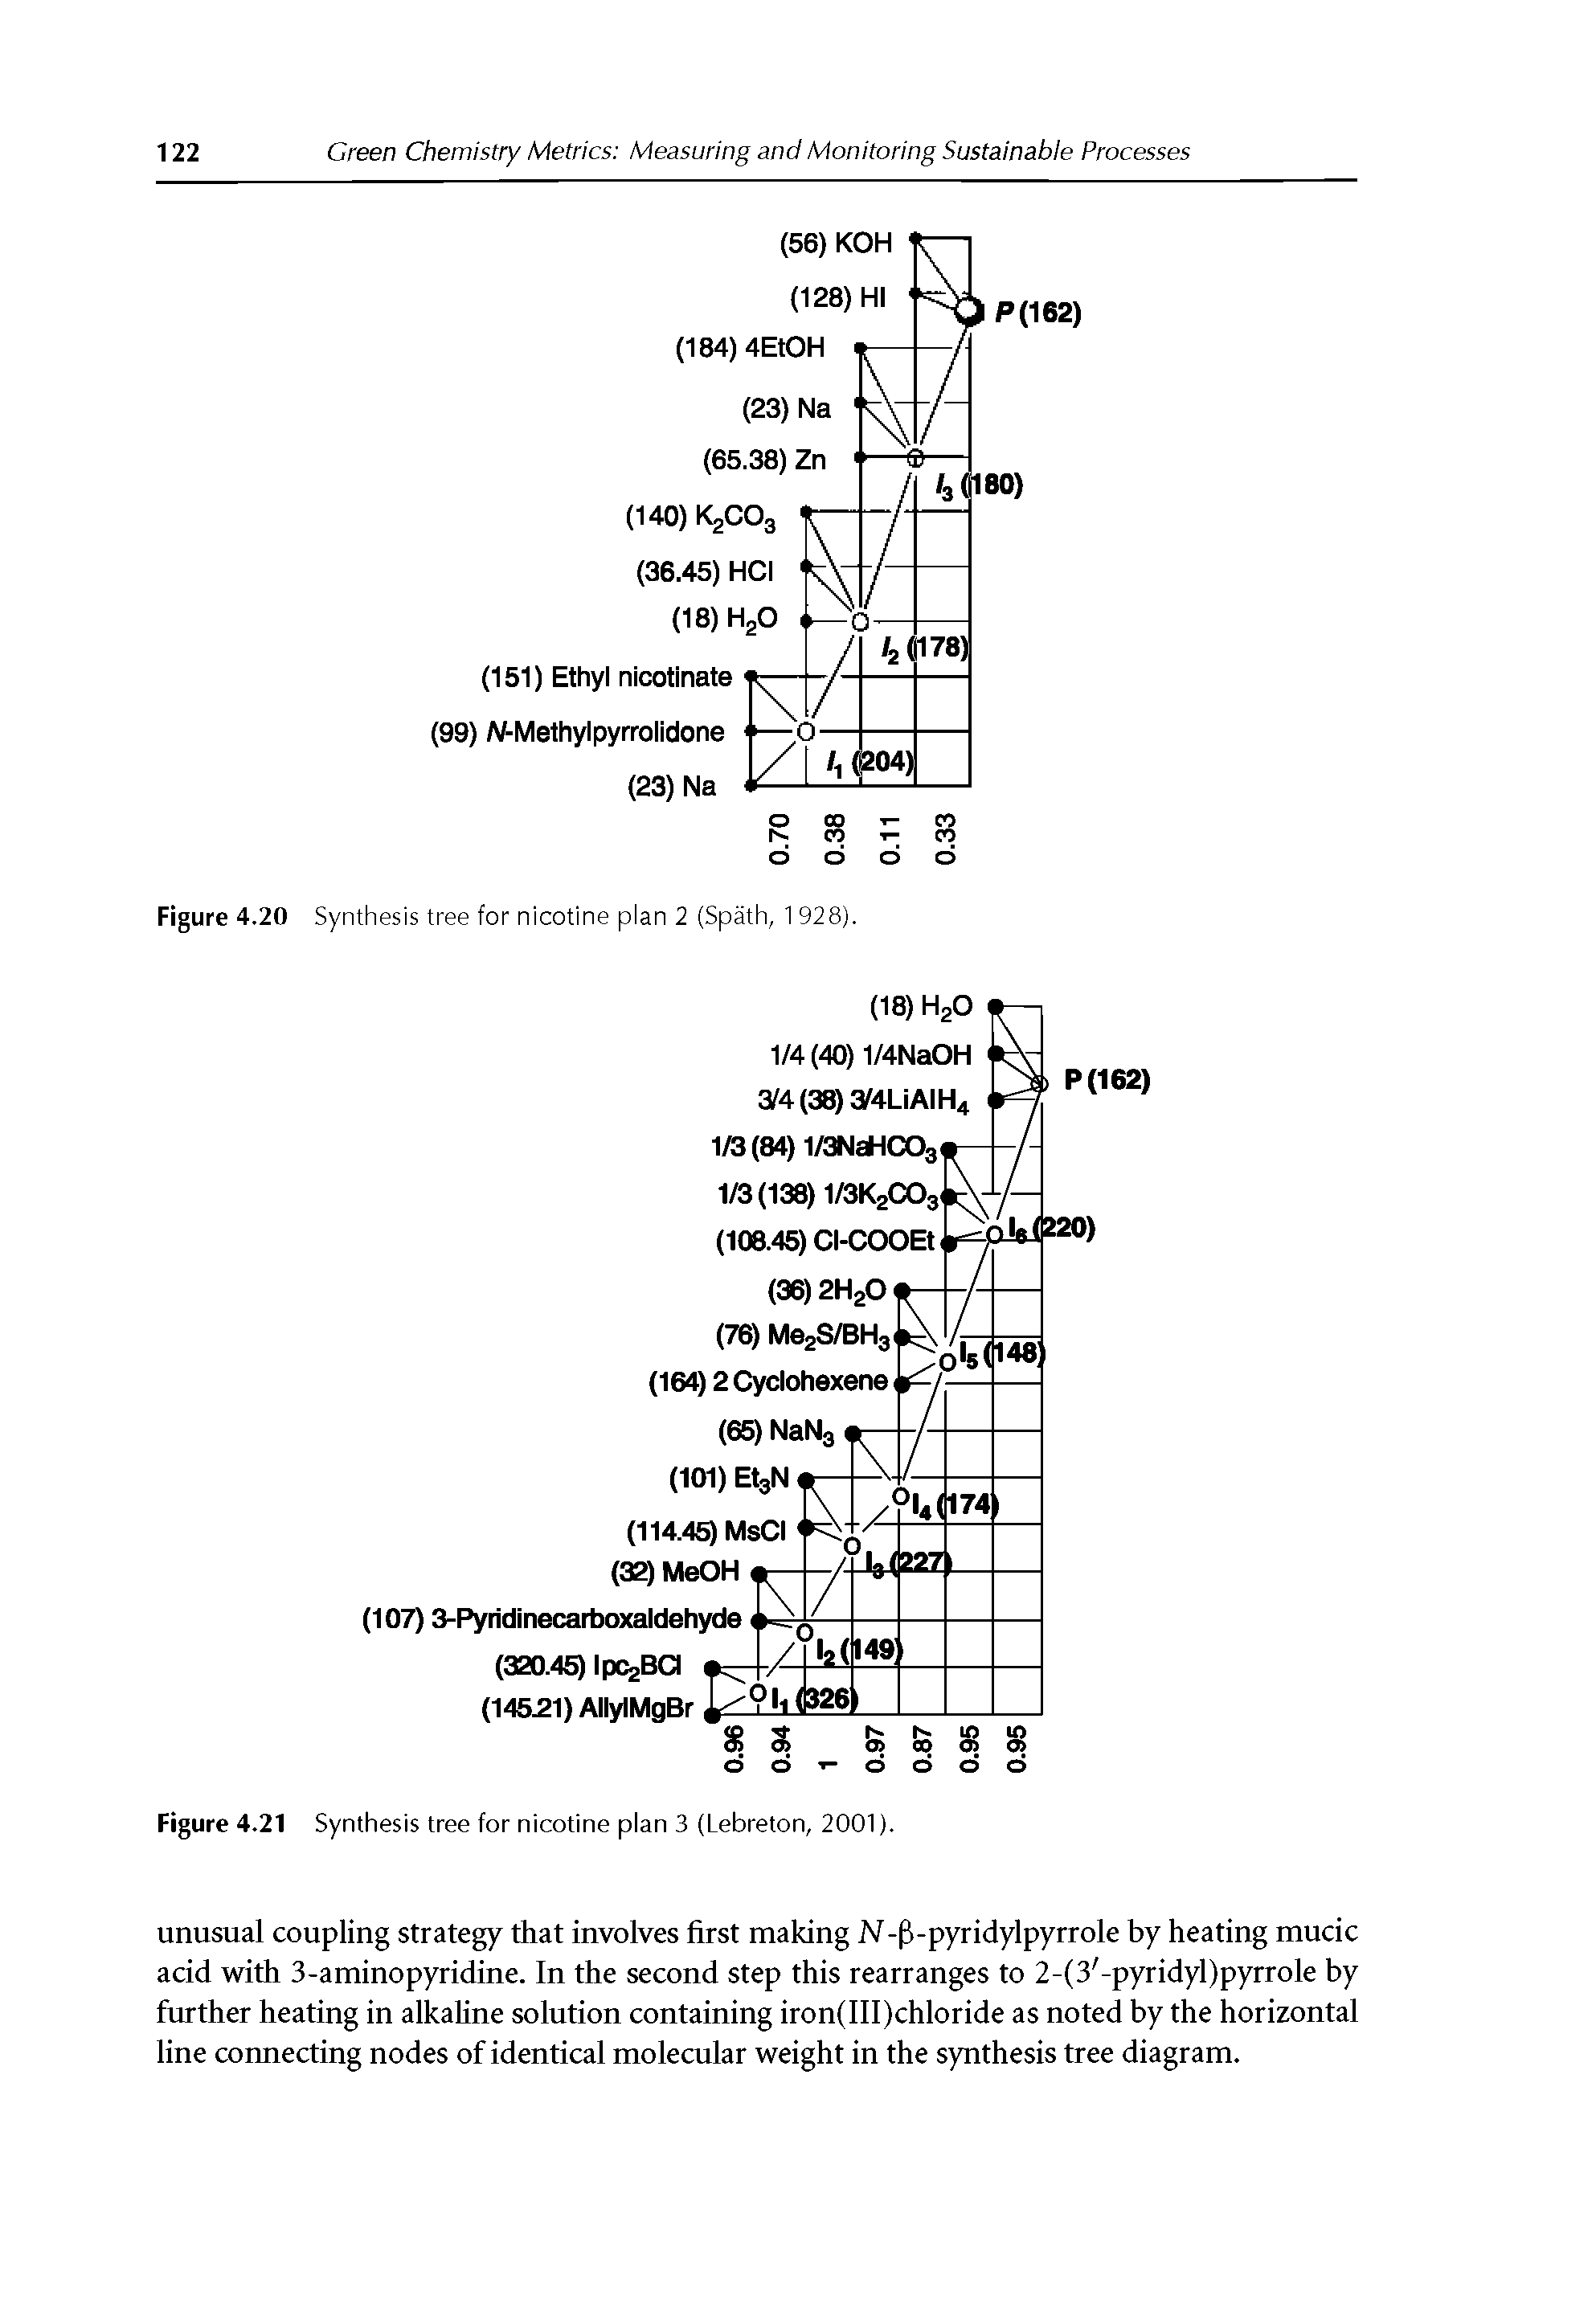 Figure 4.21 Synthesis tree for nicotine plan 3 (Lebreton, 2001).